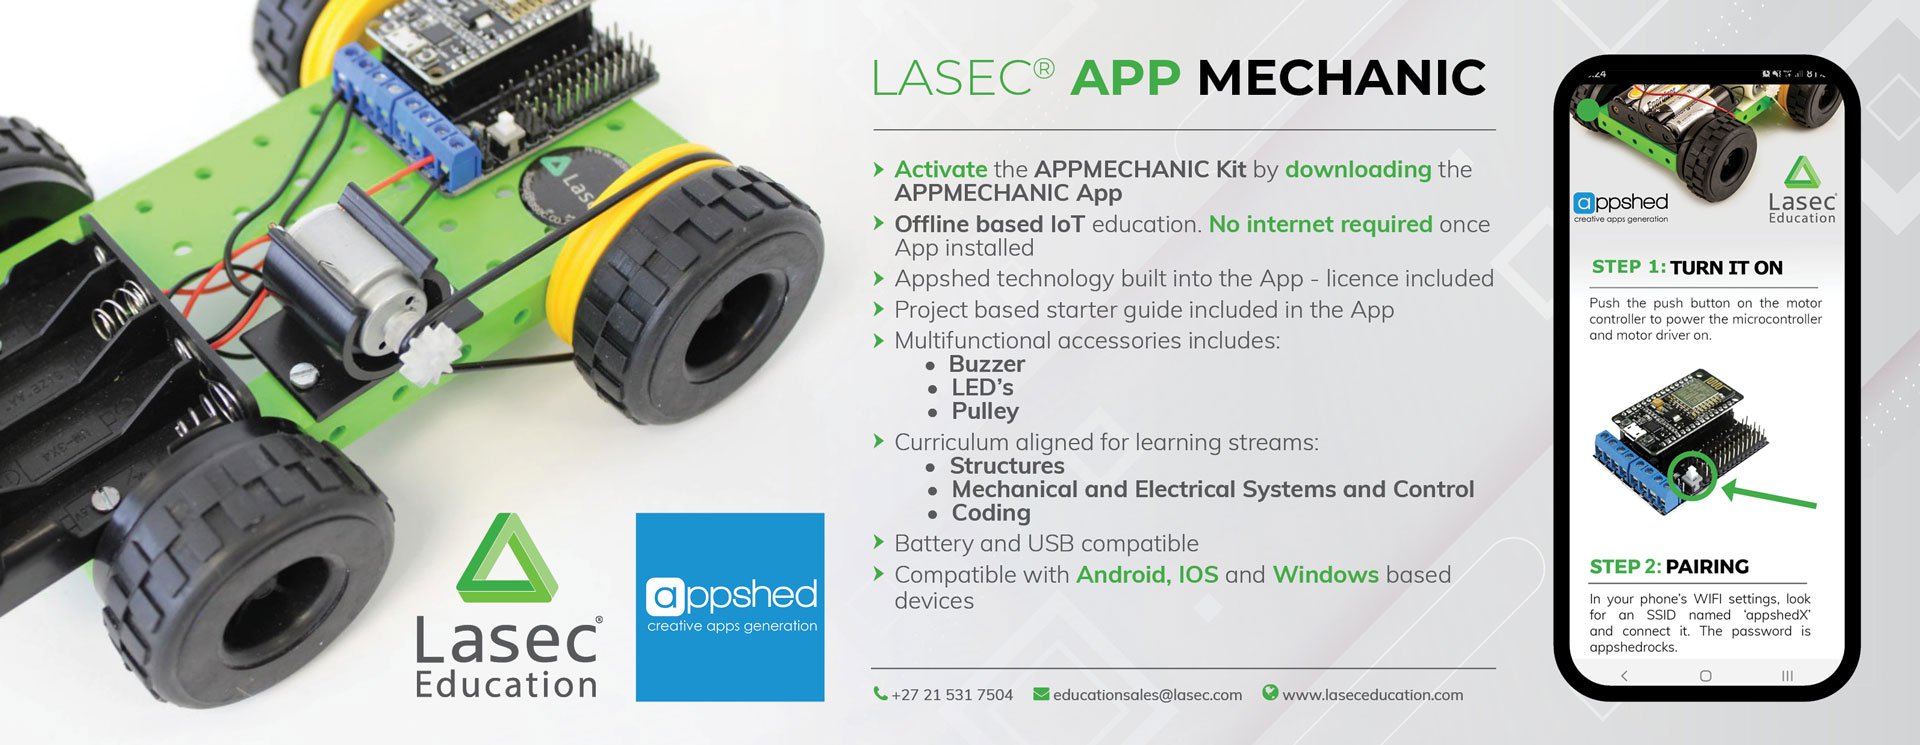 Lasec® Education App Mechanic